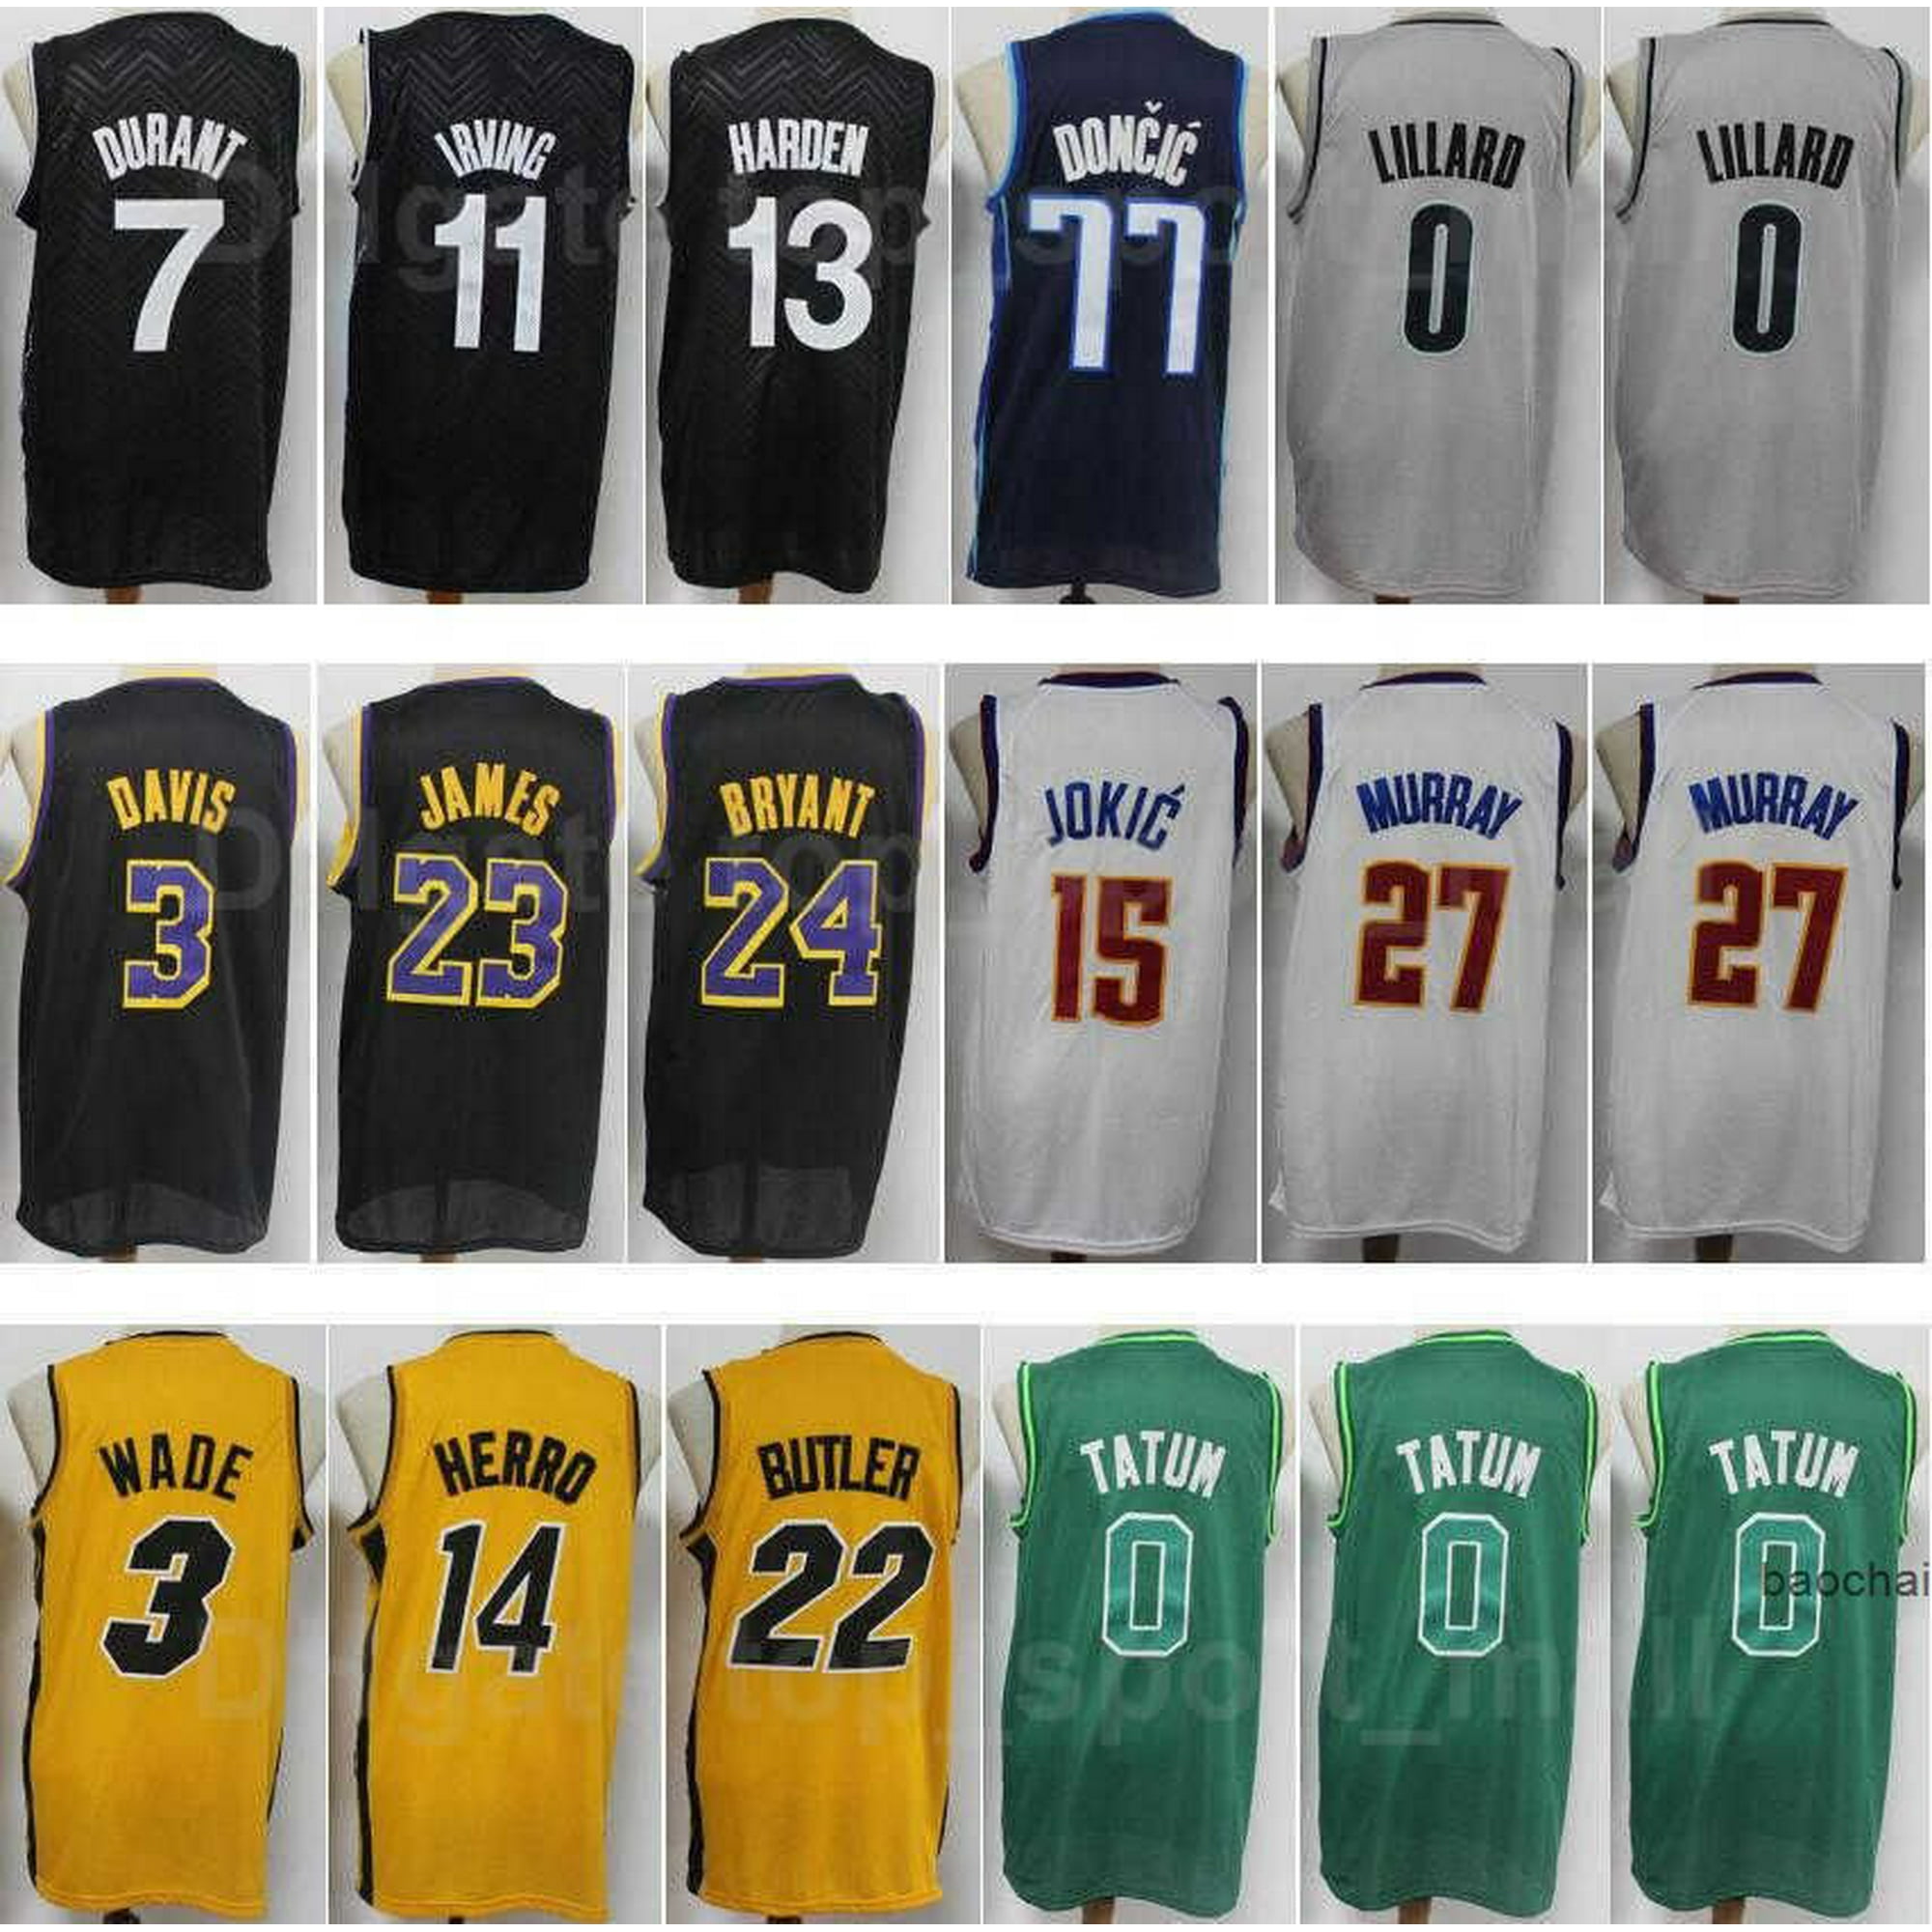 Damian Lillard NBA Jerseys, NBA Jersey, NBA Uniforms